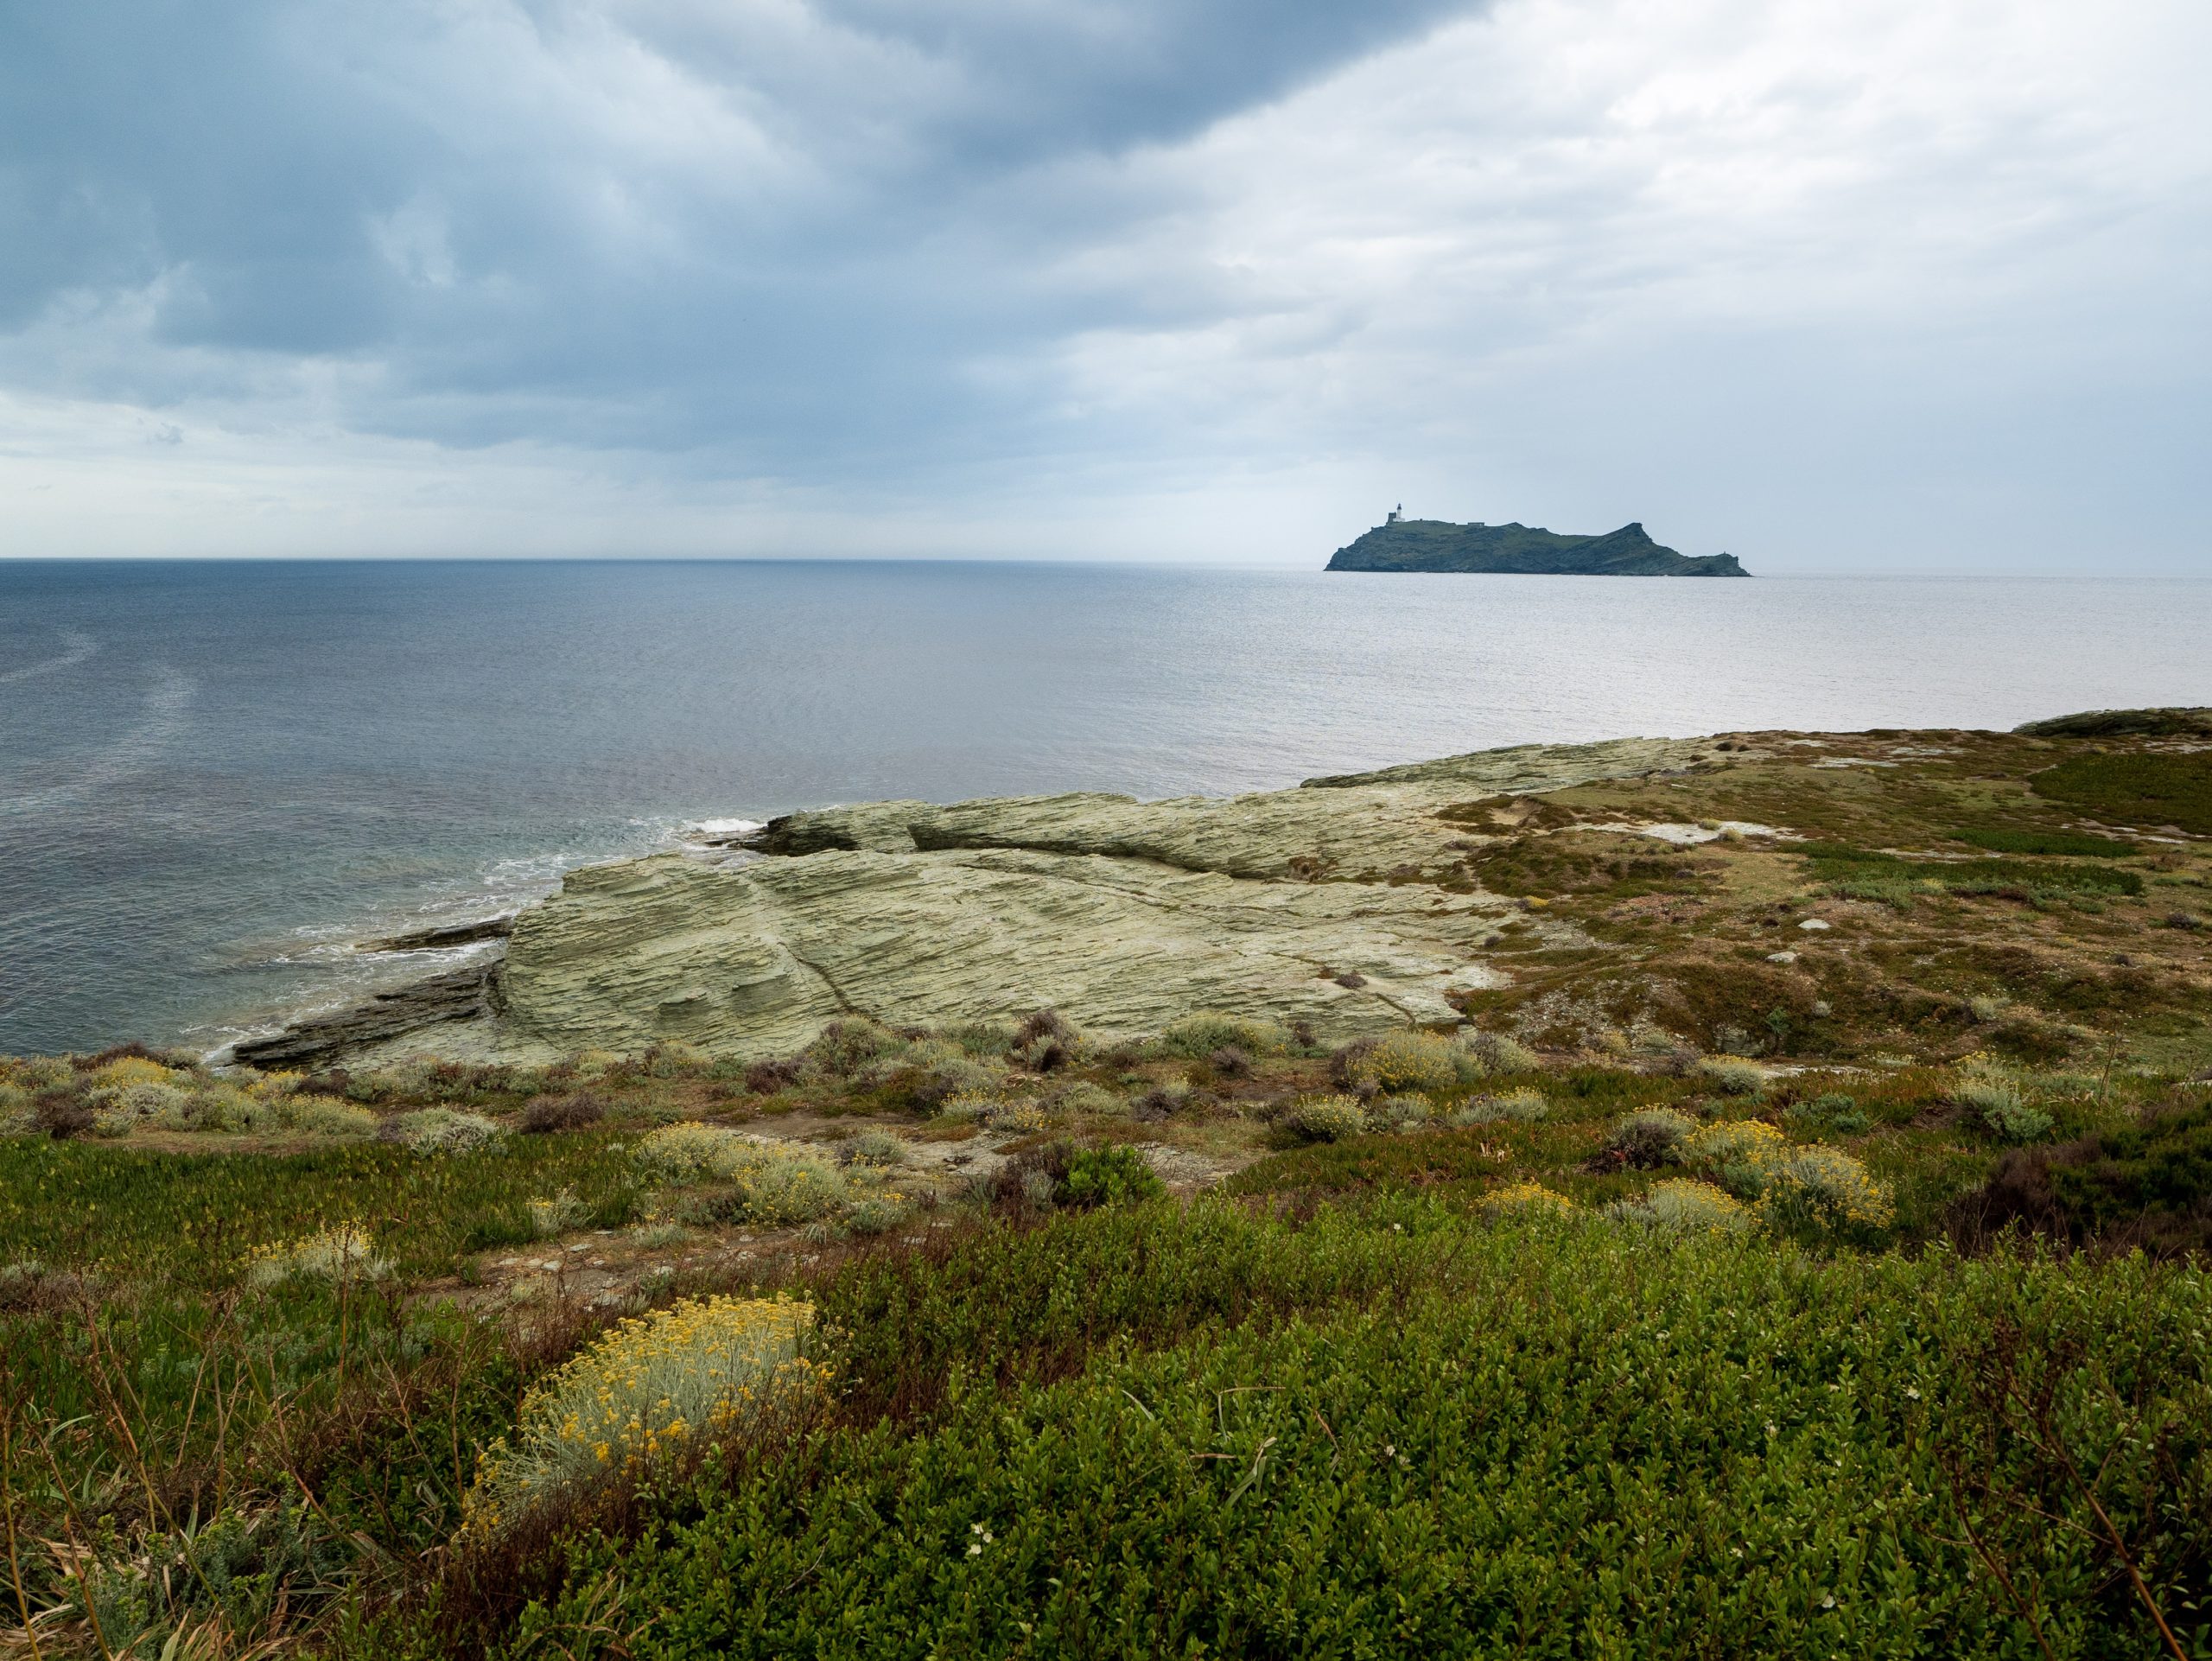 l'île de la Giraglia, extrême pointe de la Corse